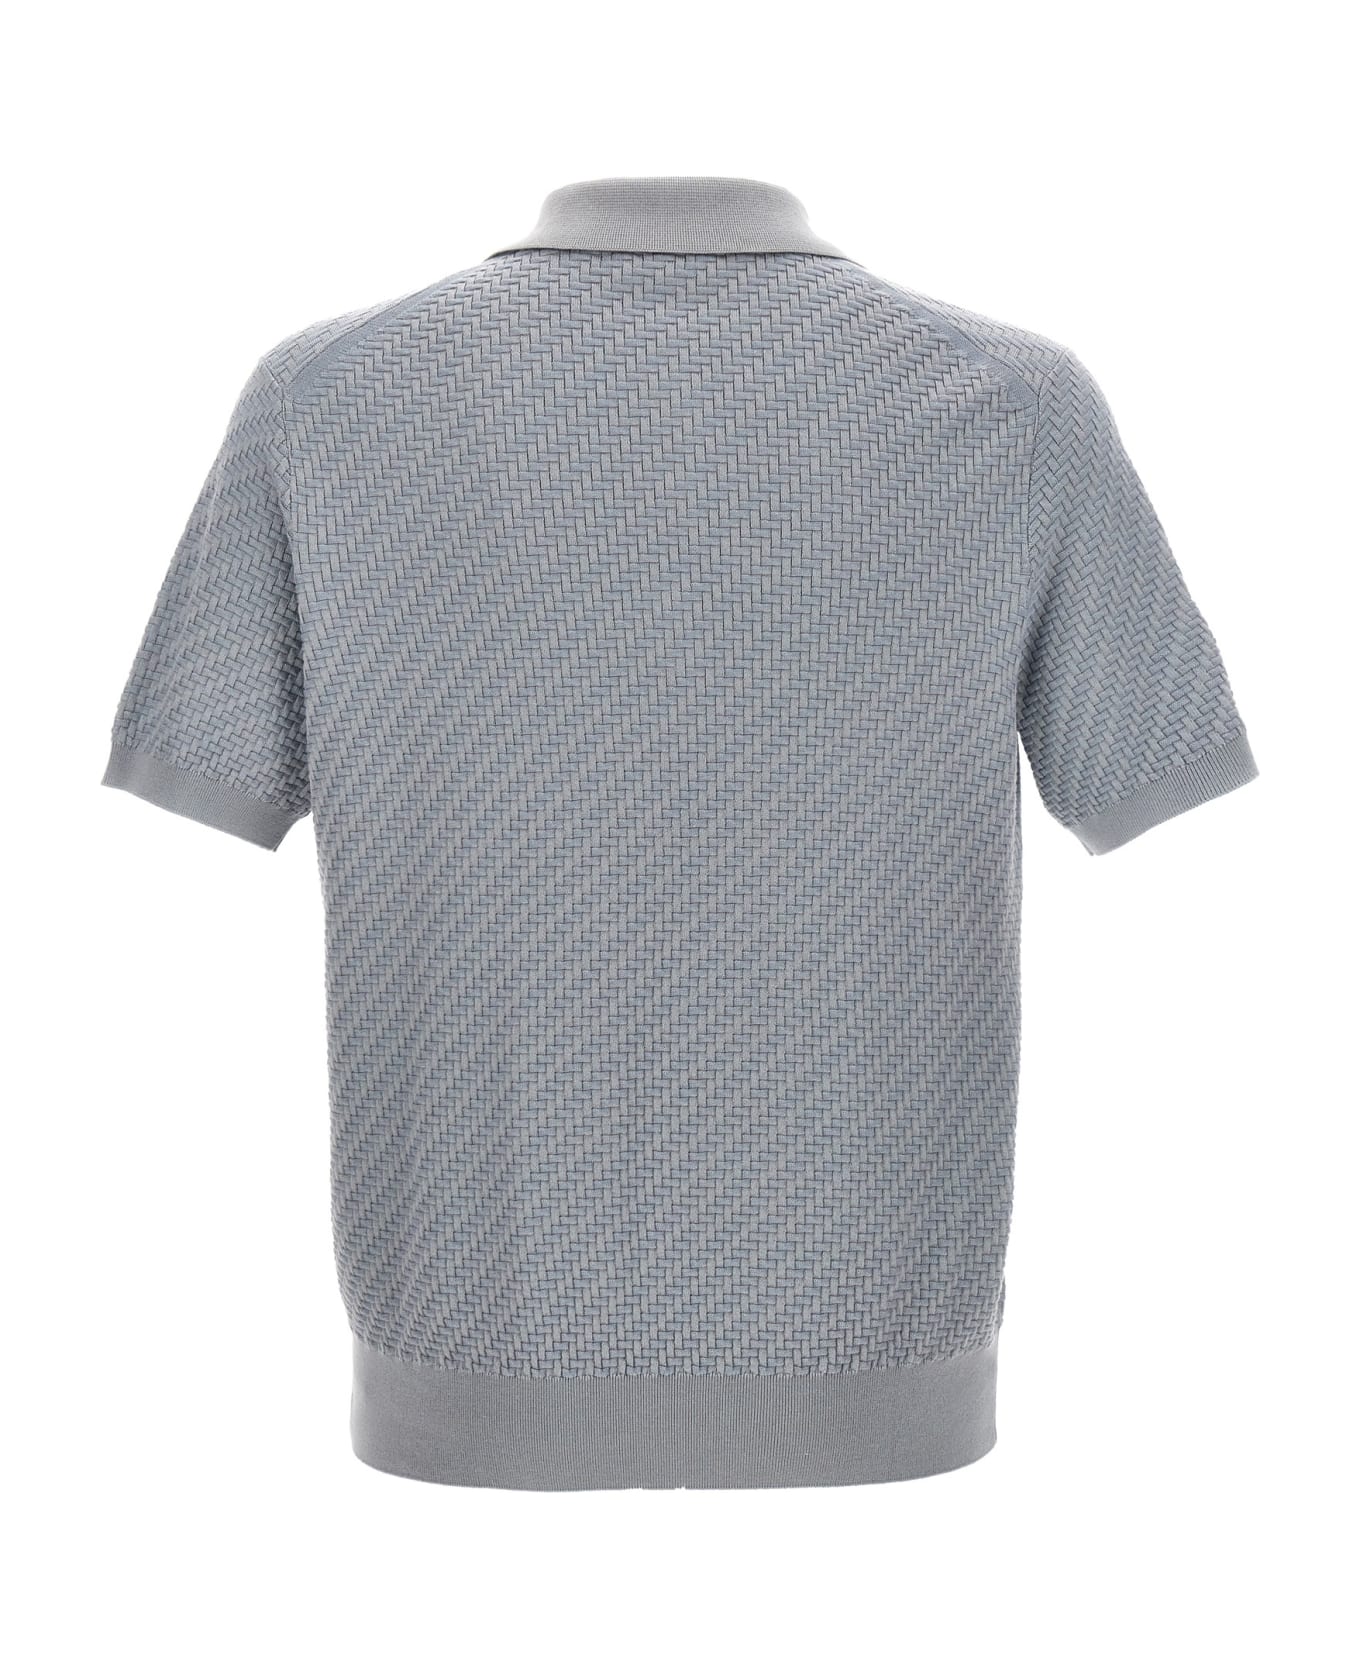 Brioni Woven Knit Polo Shirt - Light Blue ポロシャツ